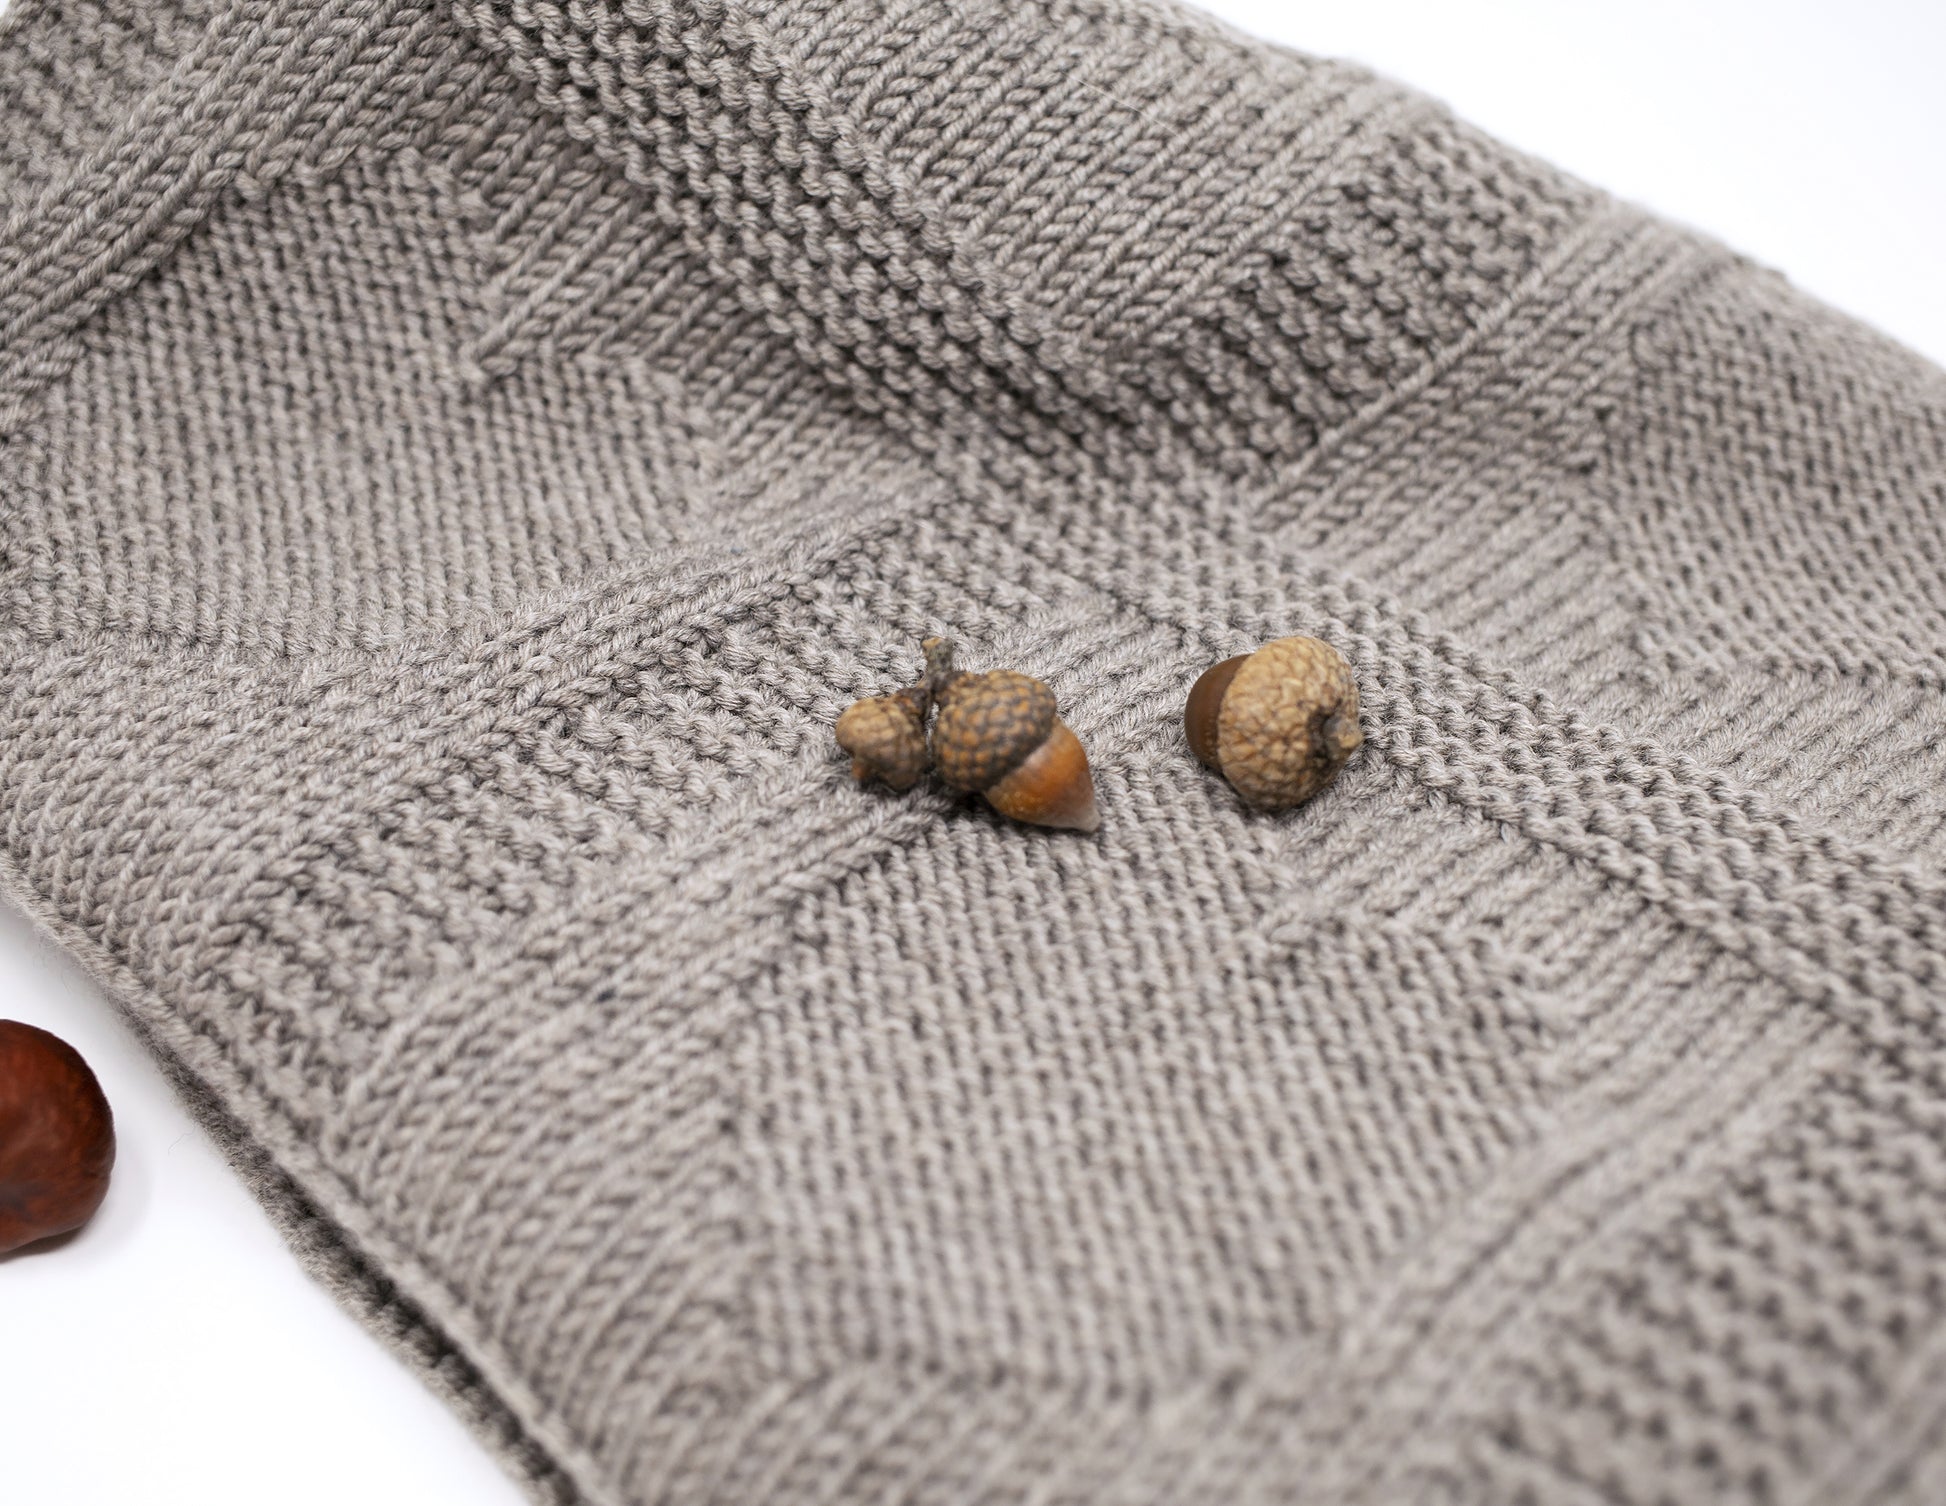 details of beige superwash merino wool yarn hand-knitted baby blanket in Hearts knitting pattern